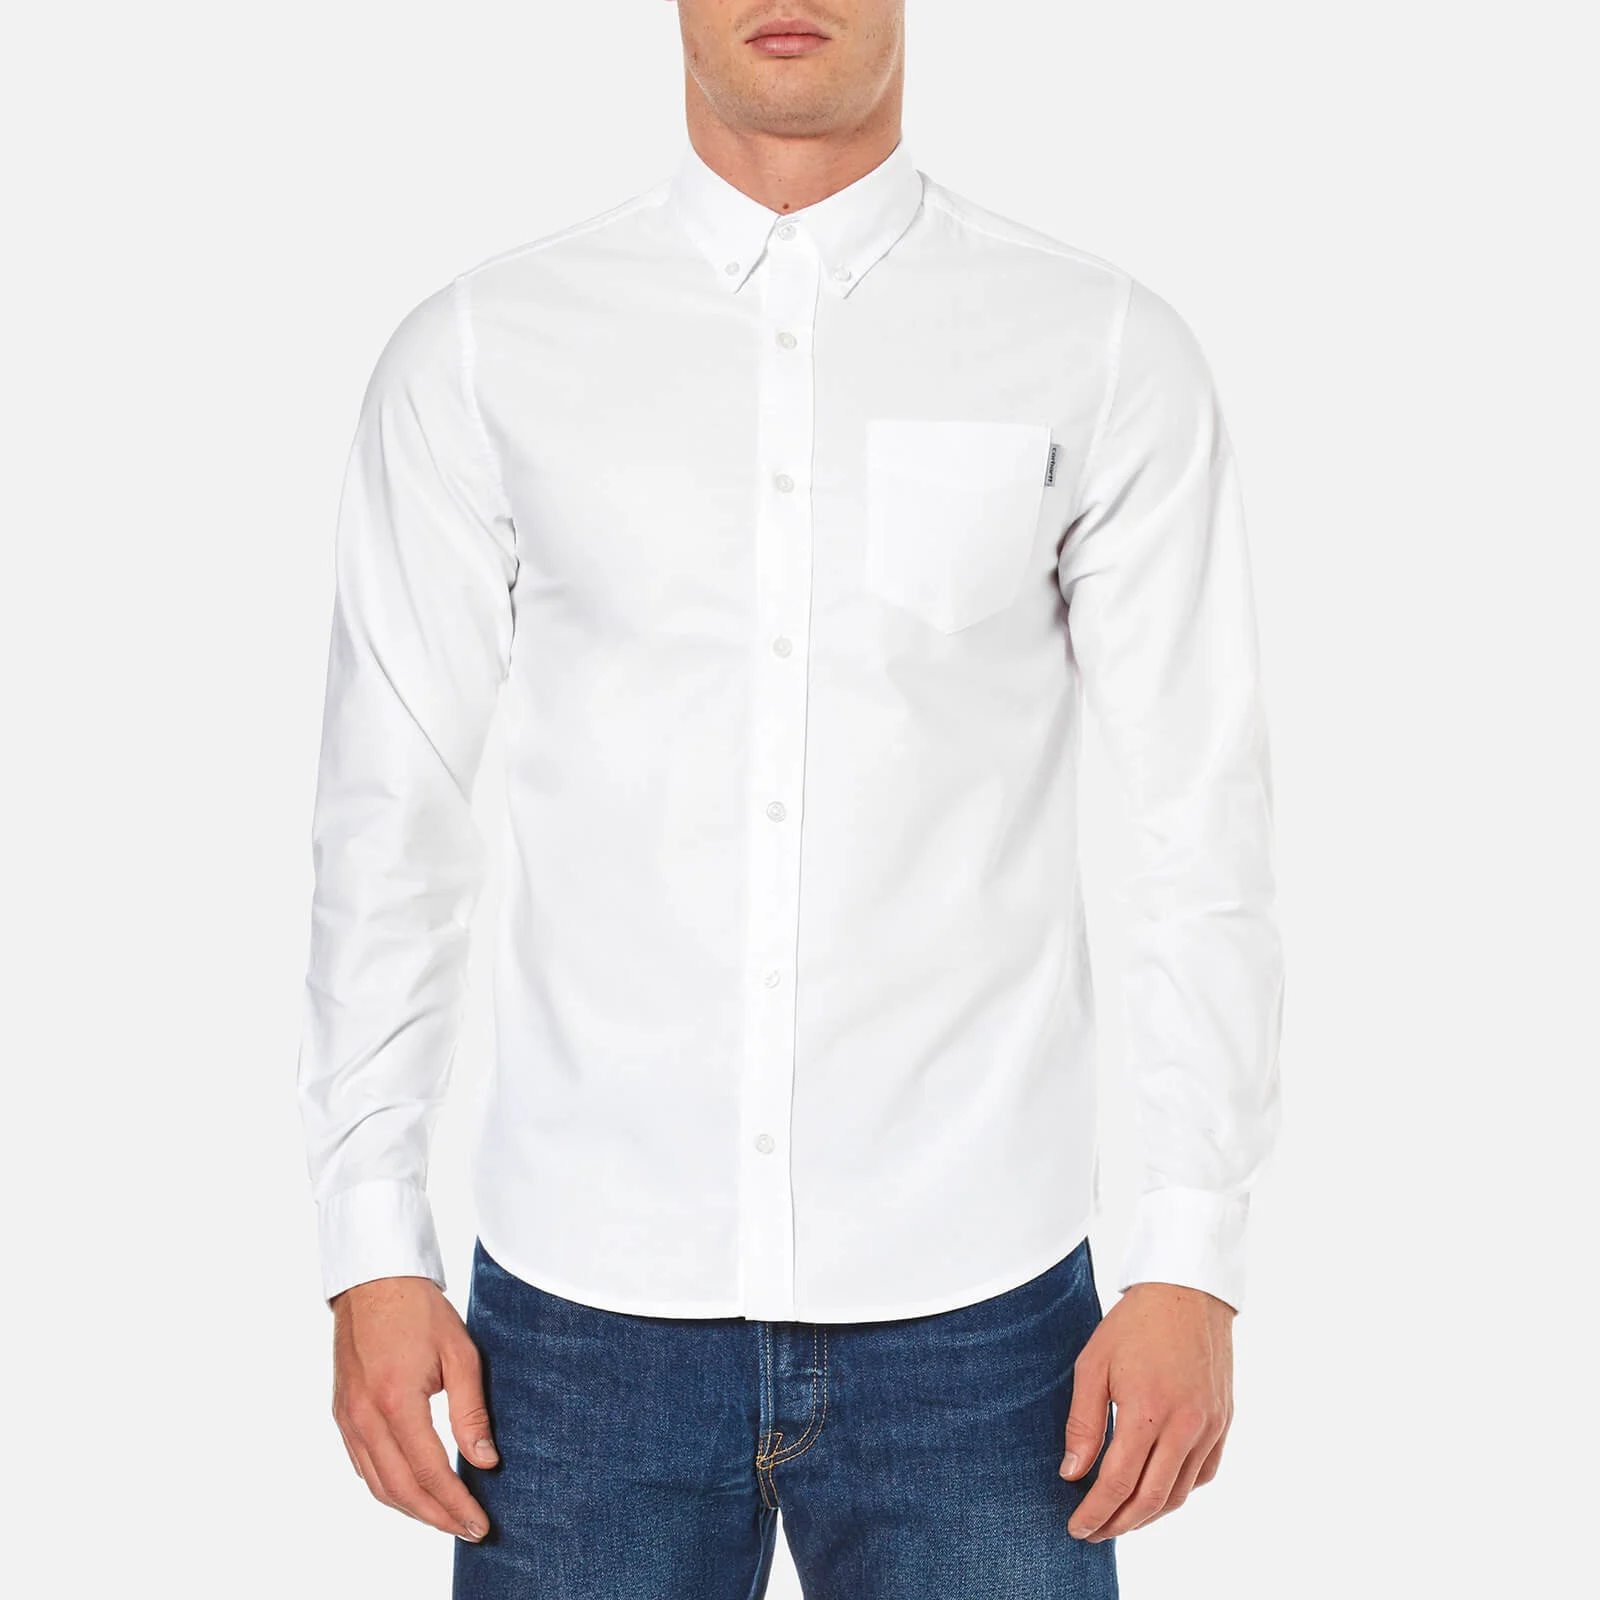 Carhartt Men's Long Sleeve Oxford Shirt - White Image 1